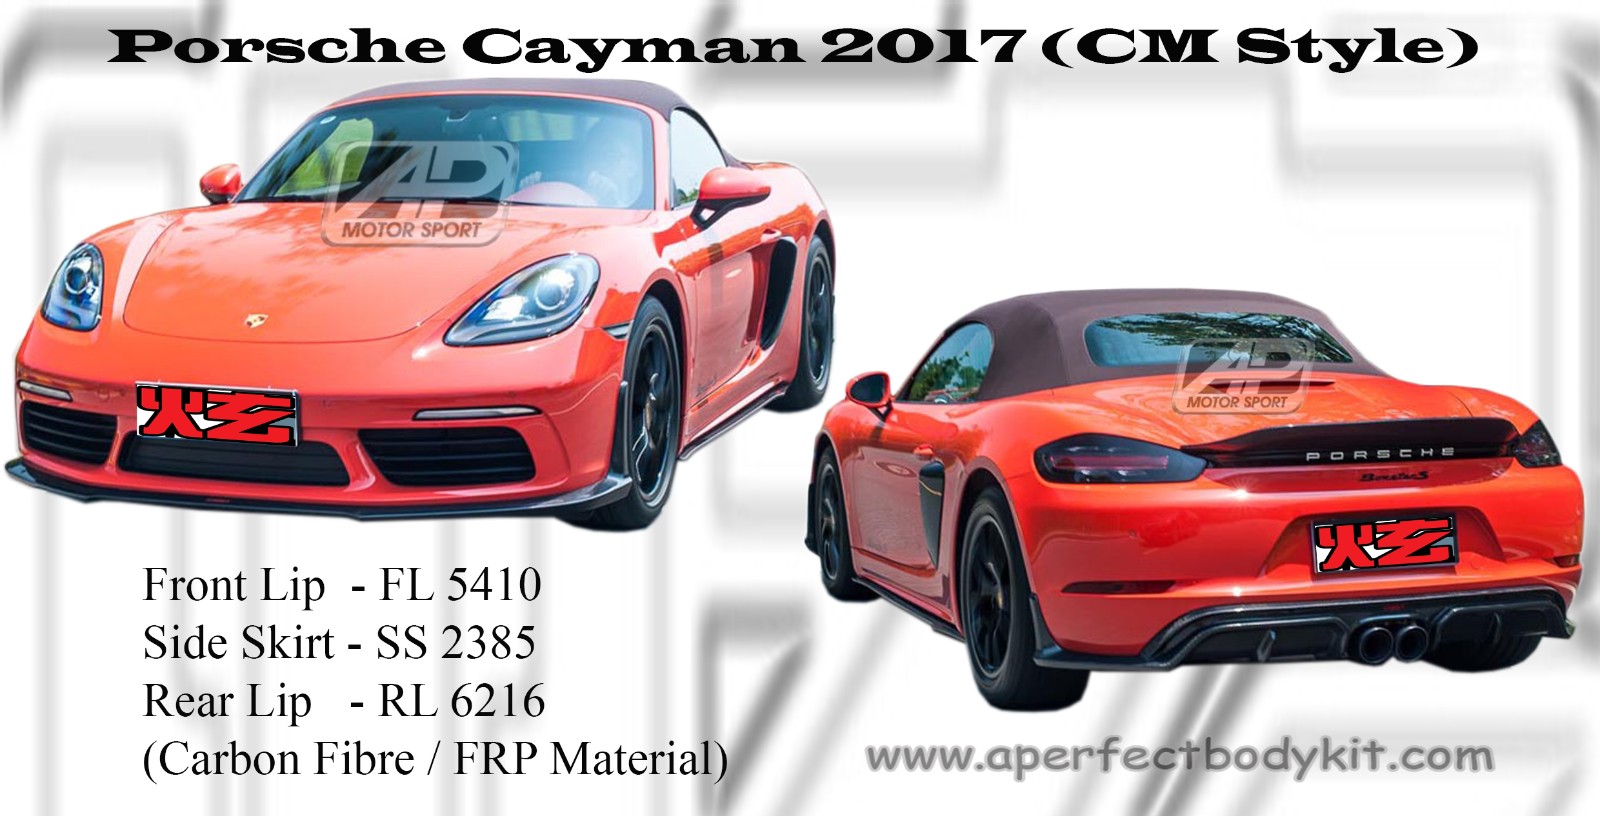 Porsche Cayman 2017 CM Style Front Lip, Side Skirt, Rear Lip